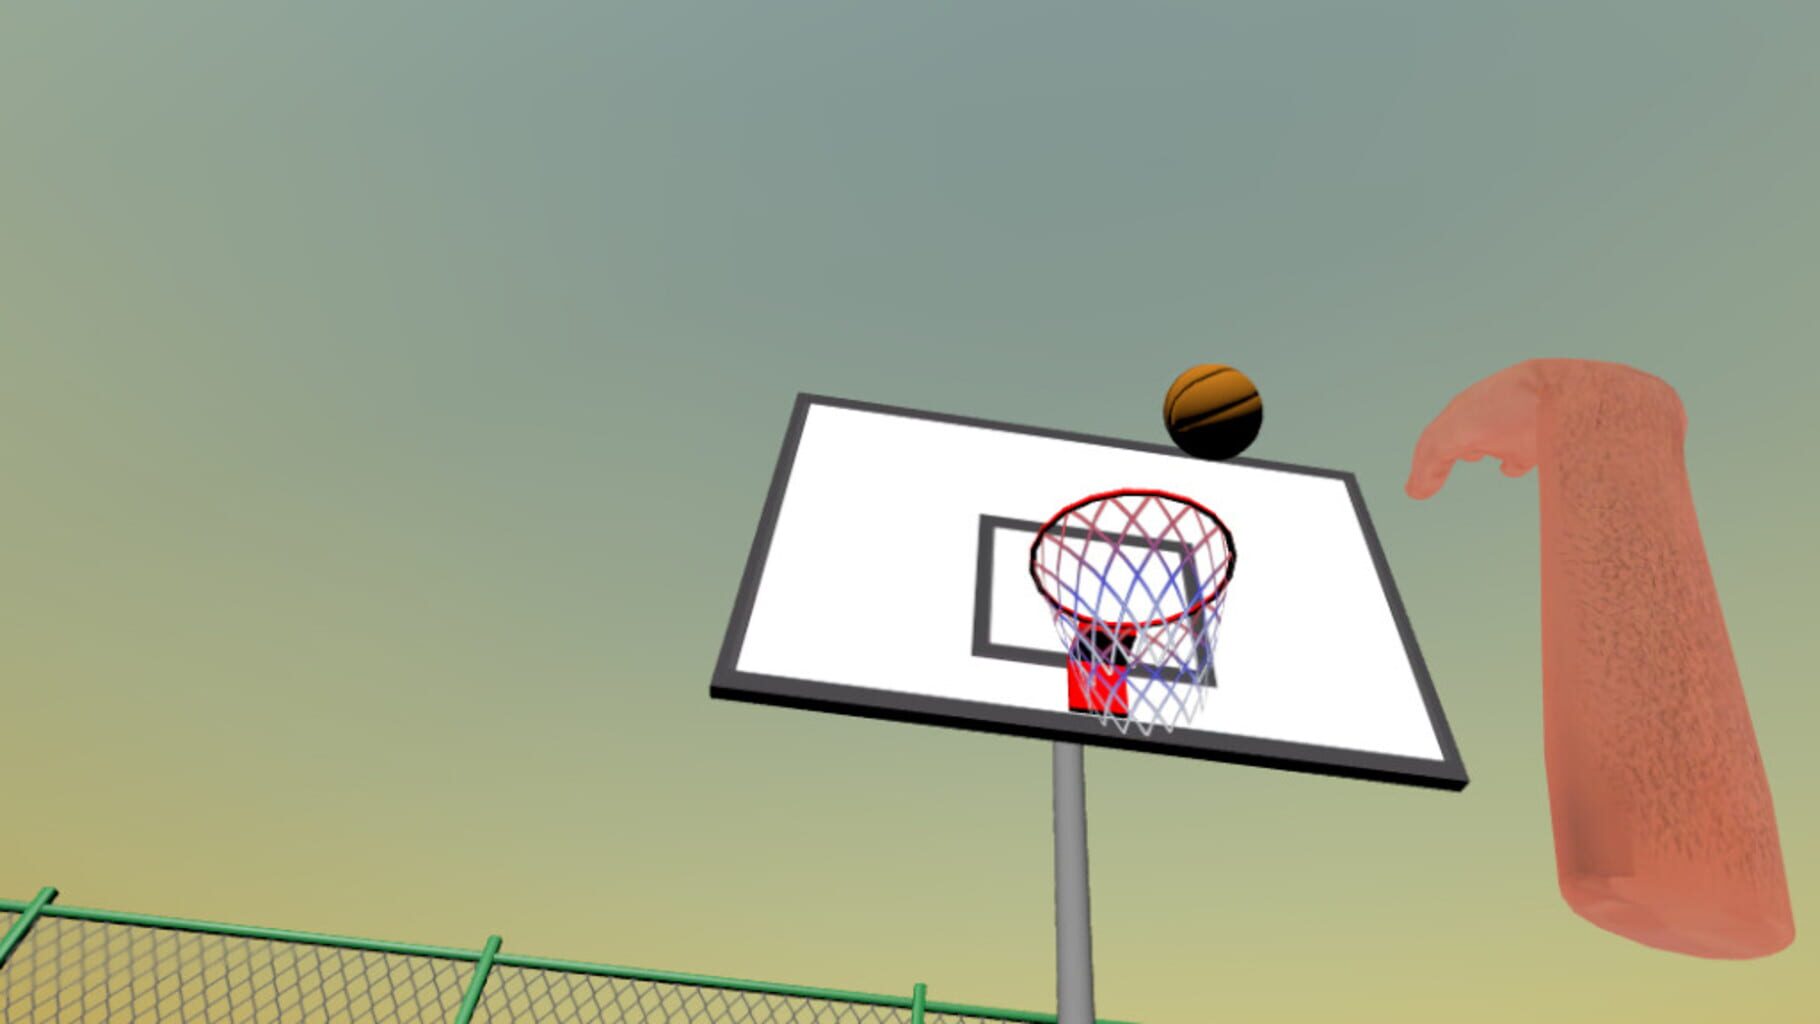 Баскетбольная игра очко. Баскетбол VR. VR игра баскетбол. VR мини игры баскетбол. KOTC VR Basketball VR.